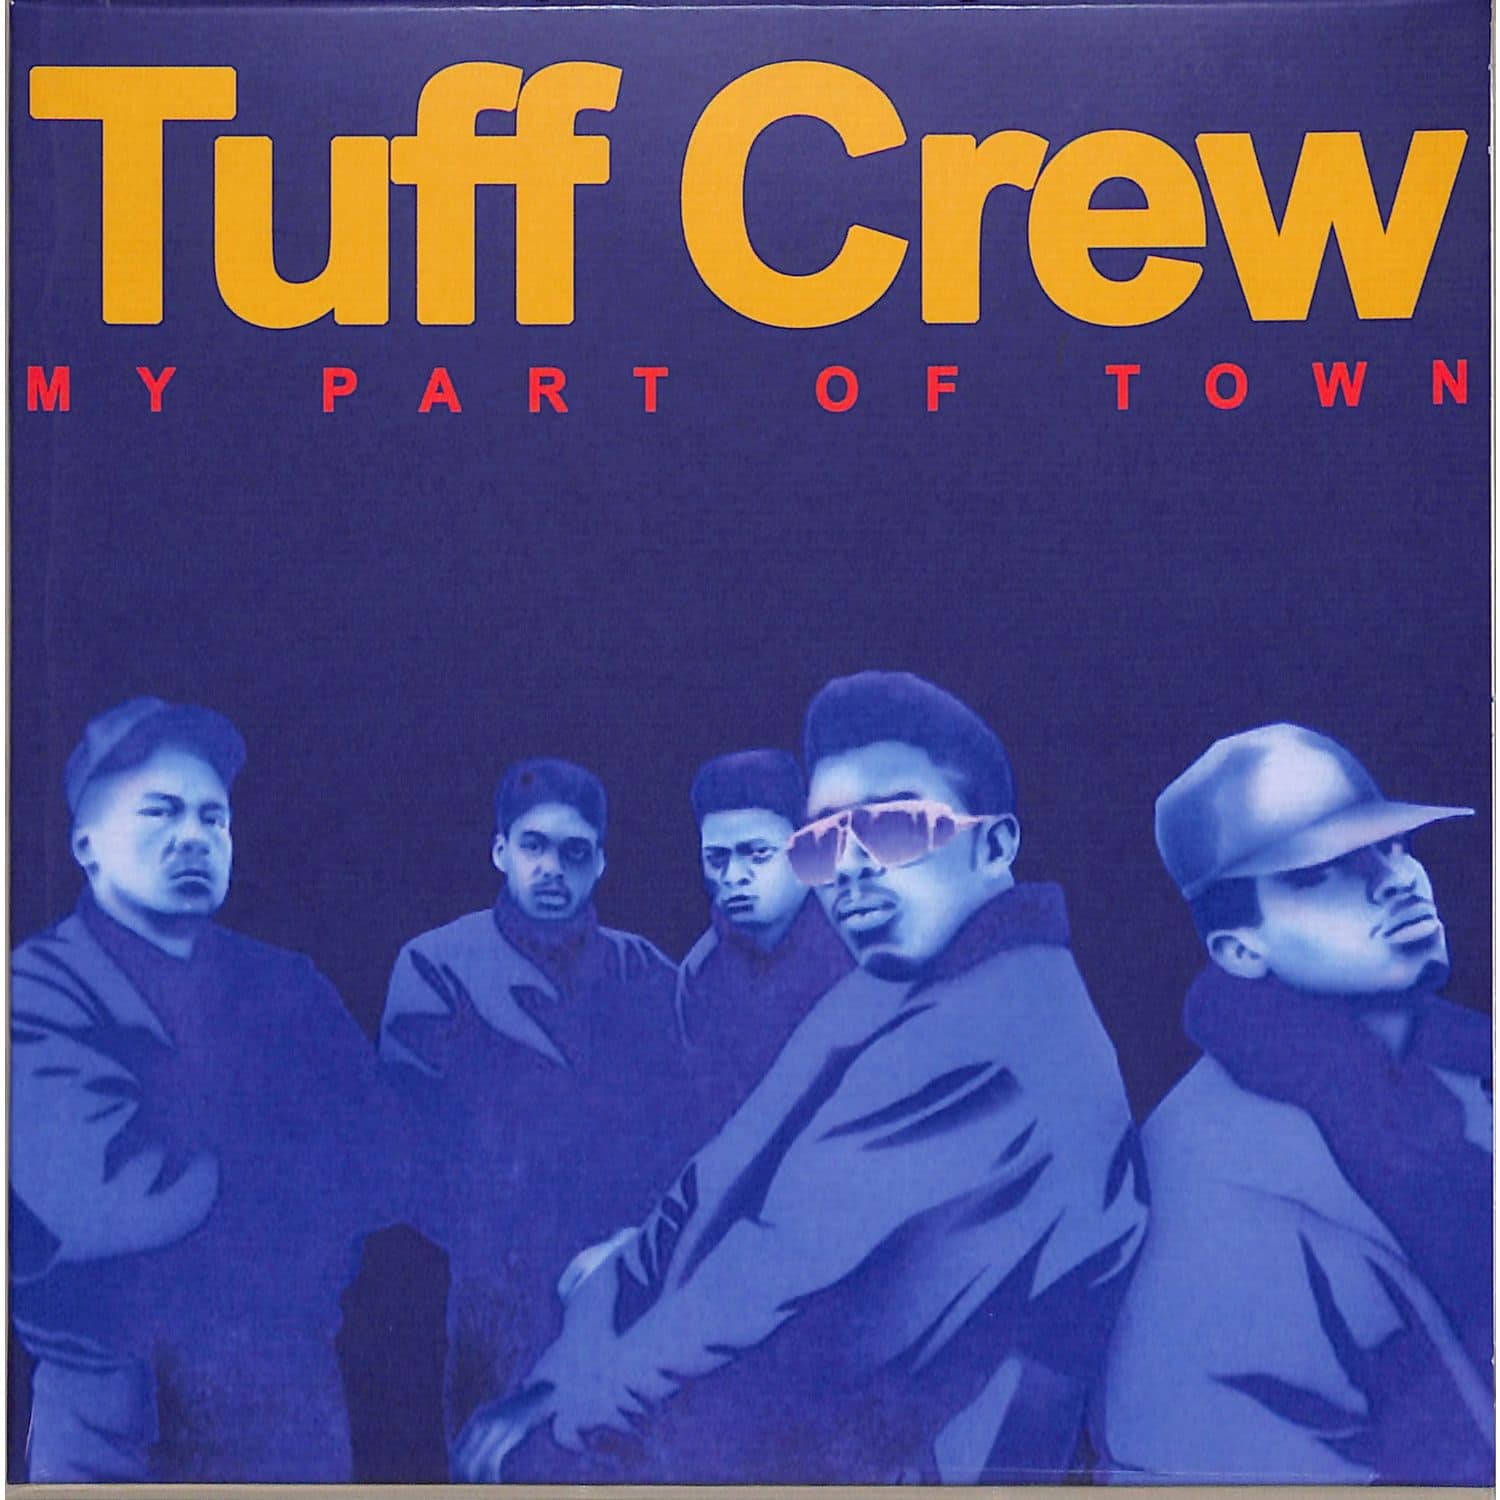 Tuff Crew - MY PART OF TOWN / MOUNTAINS WORLD 